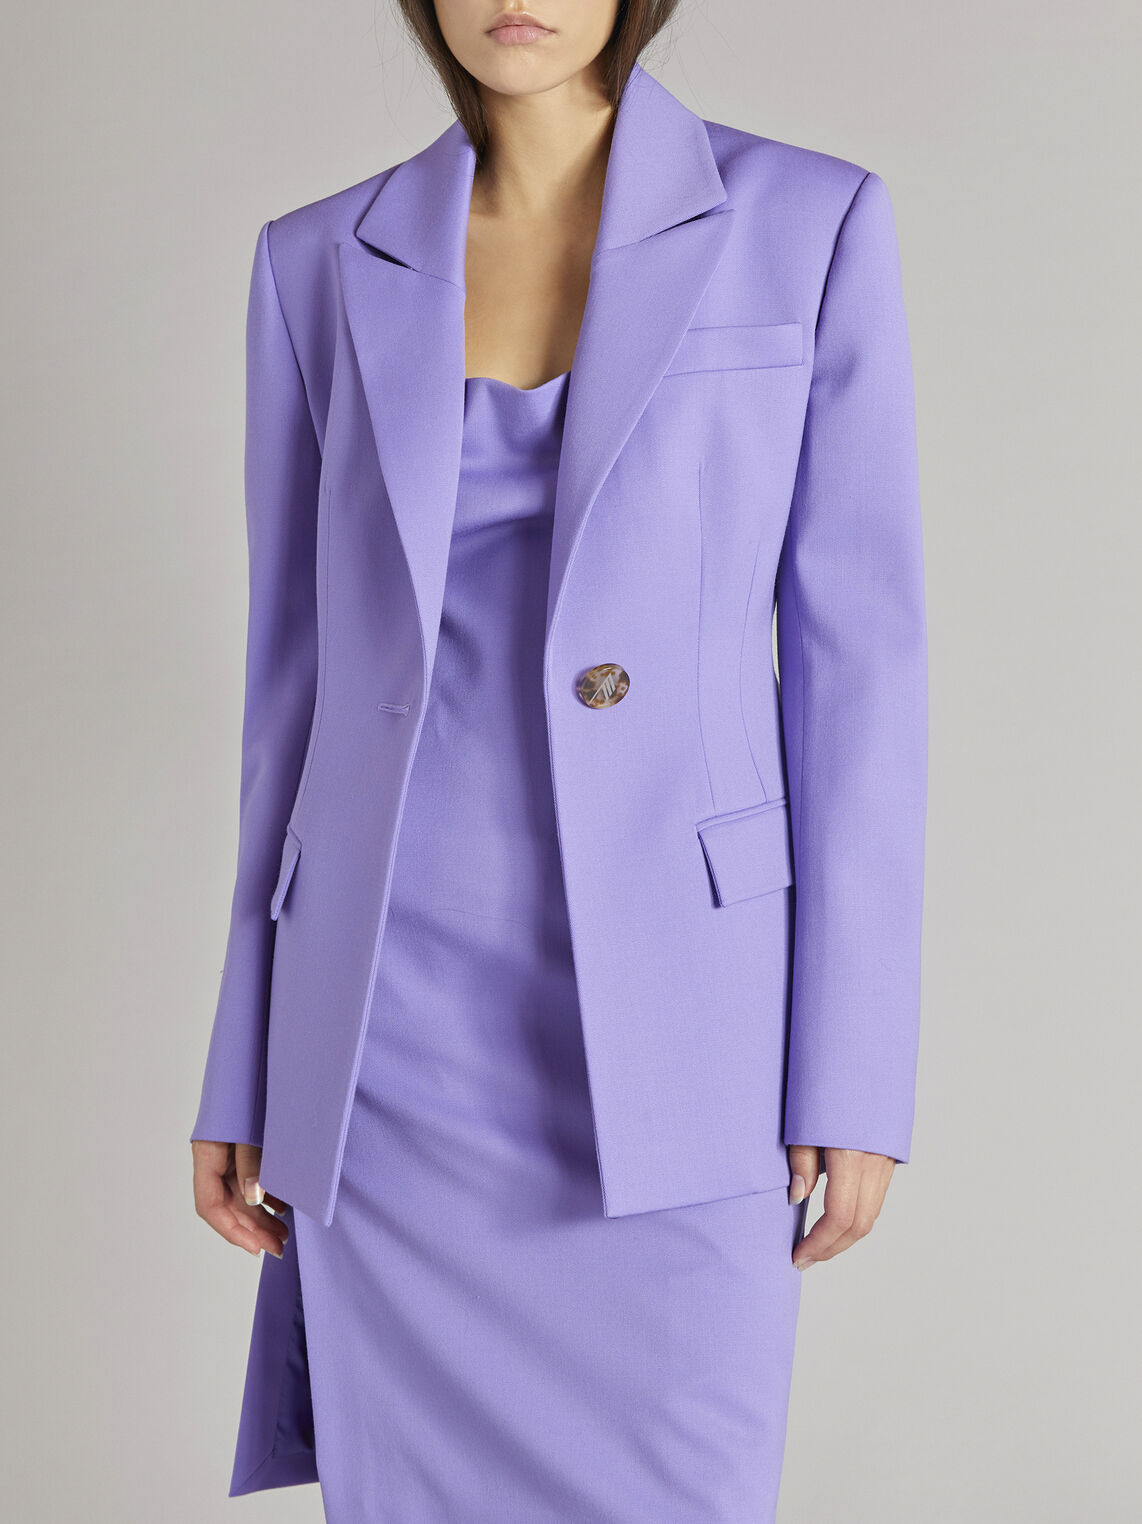 THE ATTICO "Blue" lilac clessidra jacket 2